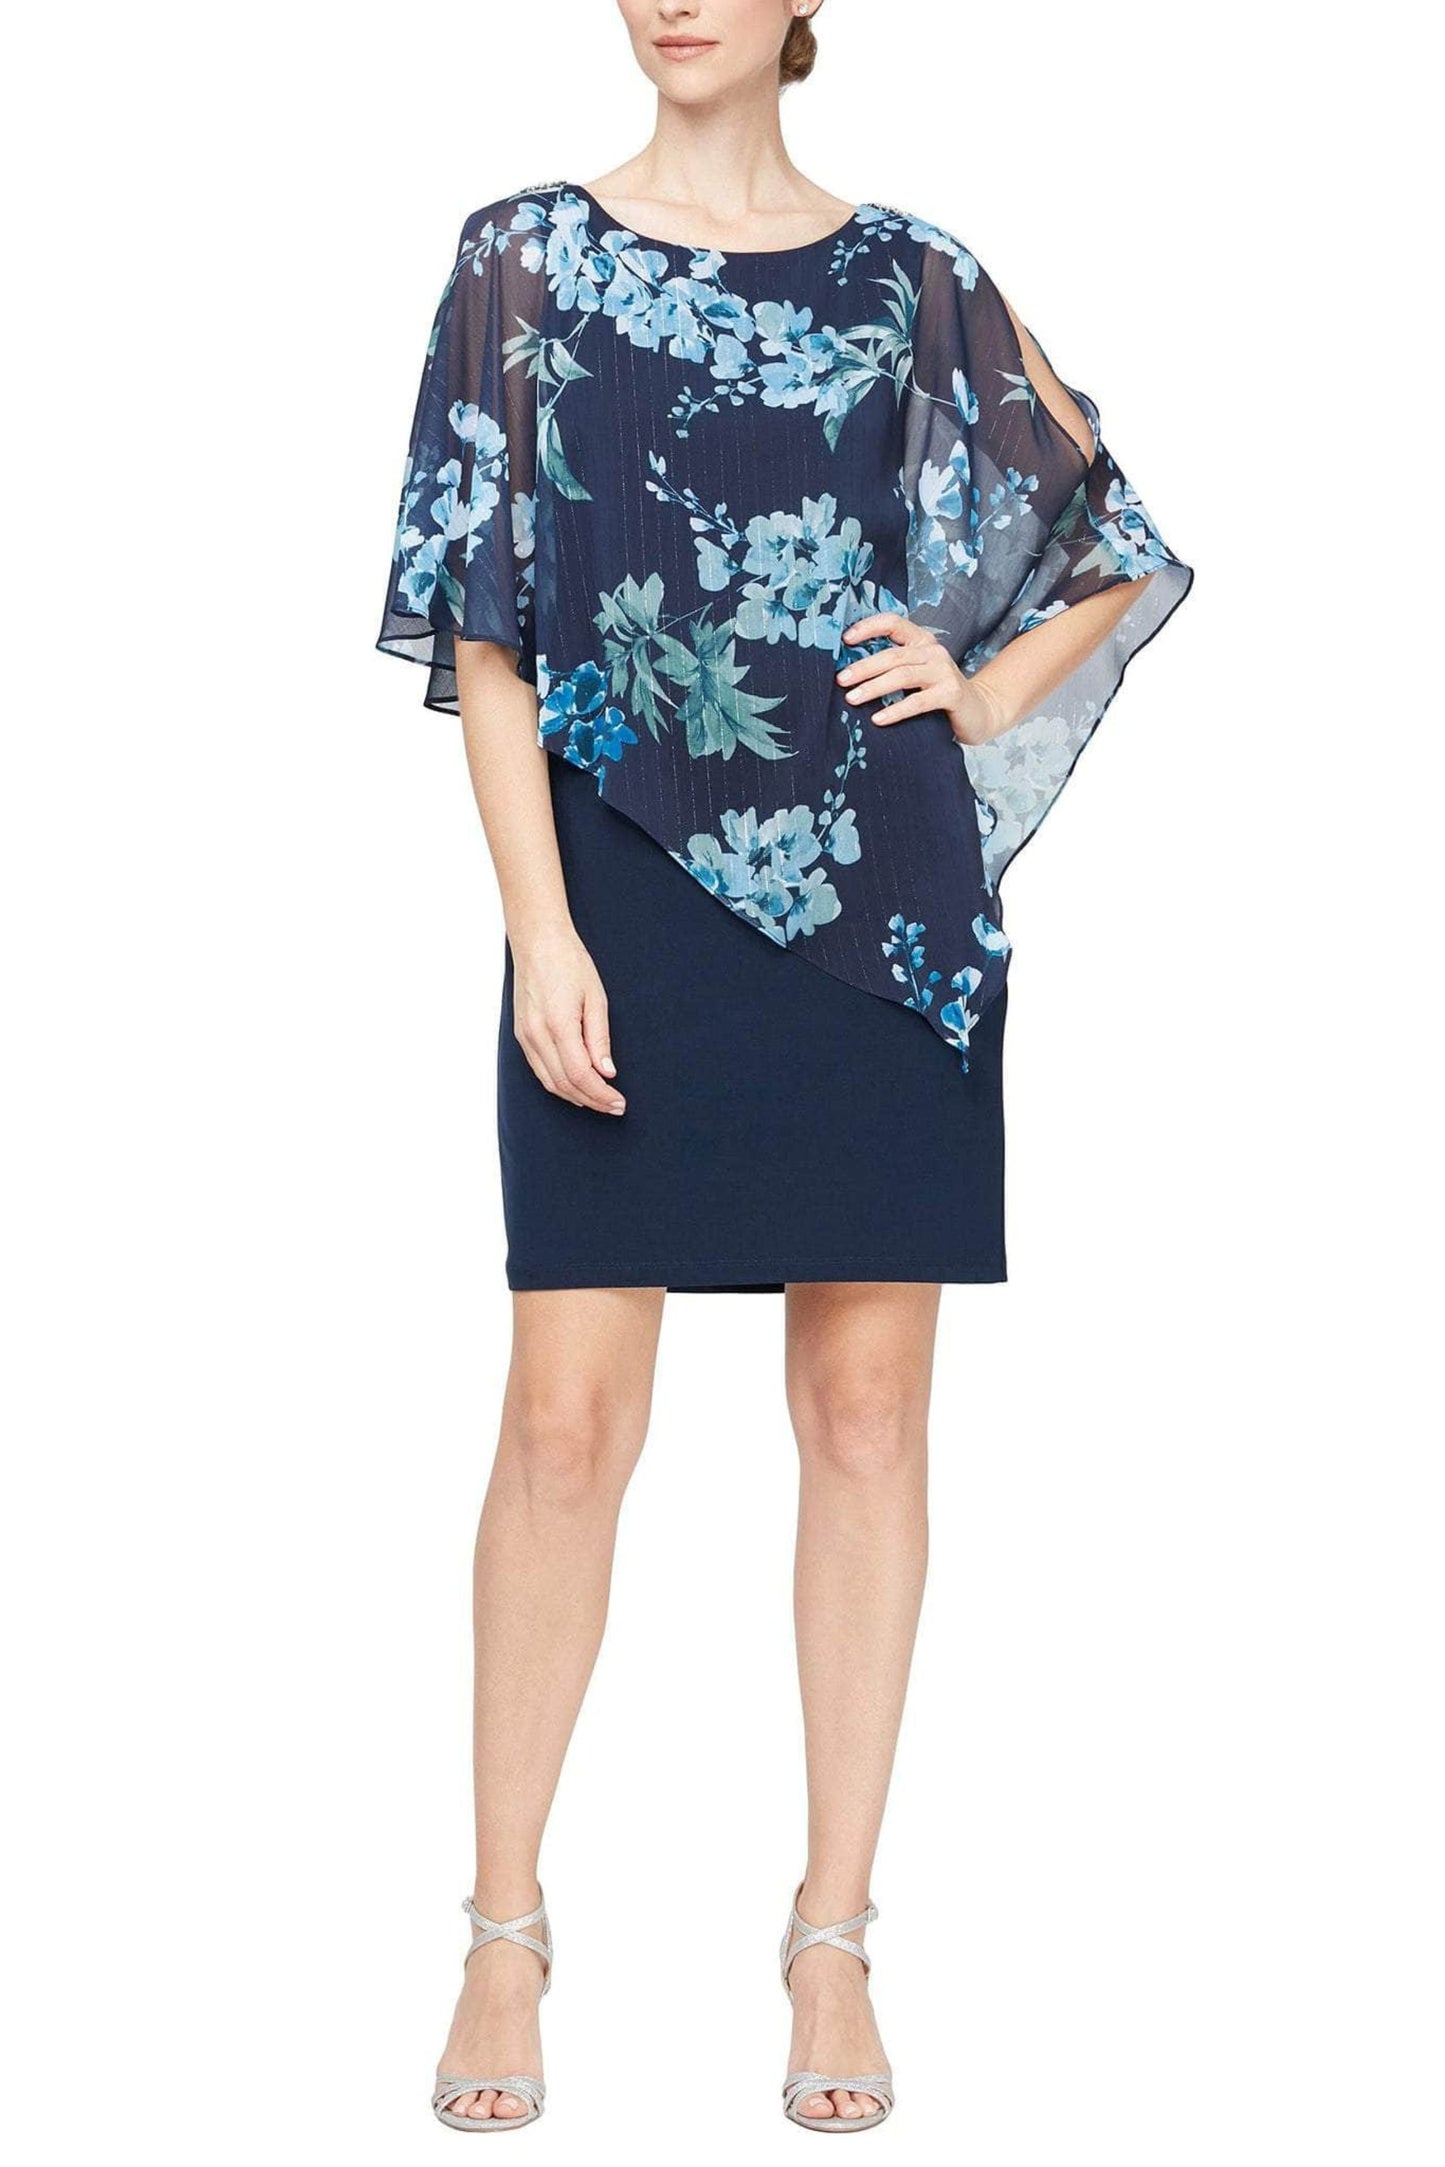 SLNY Floral Print Poncho-Style Short Evening Dress